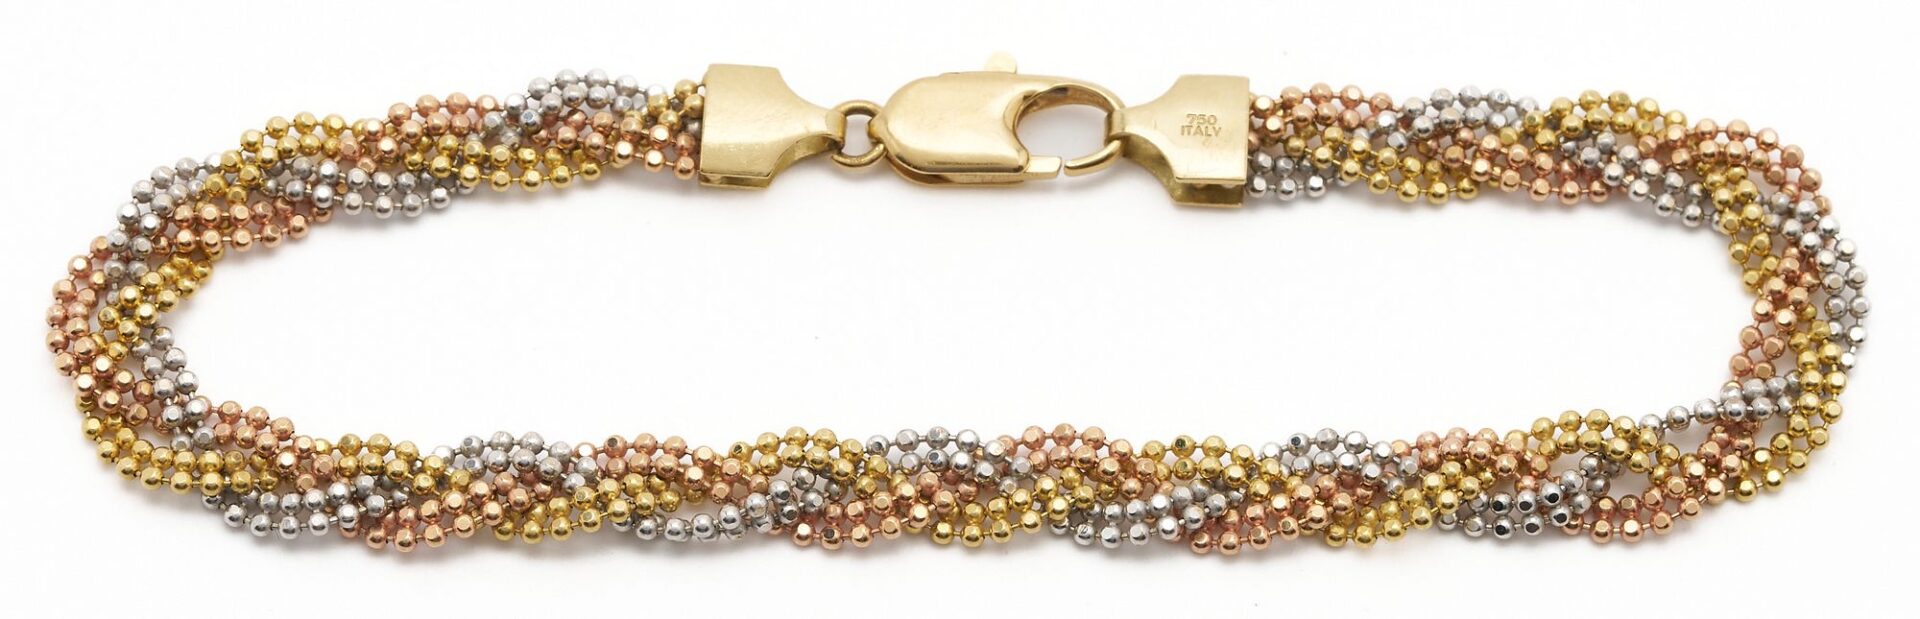 Lot 1037: 18K Gold Tricolor Weave Bracelet